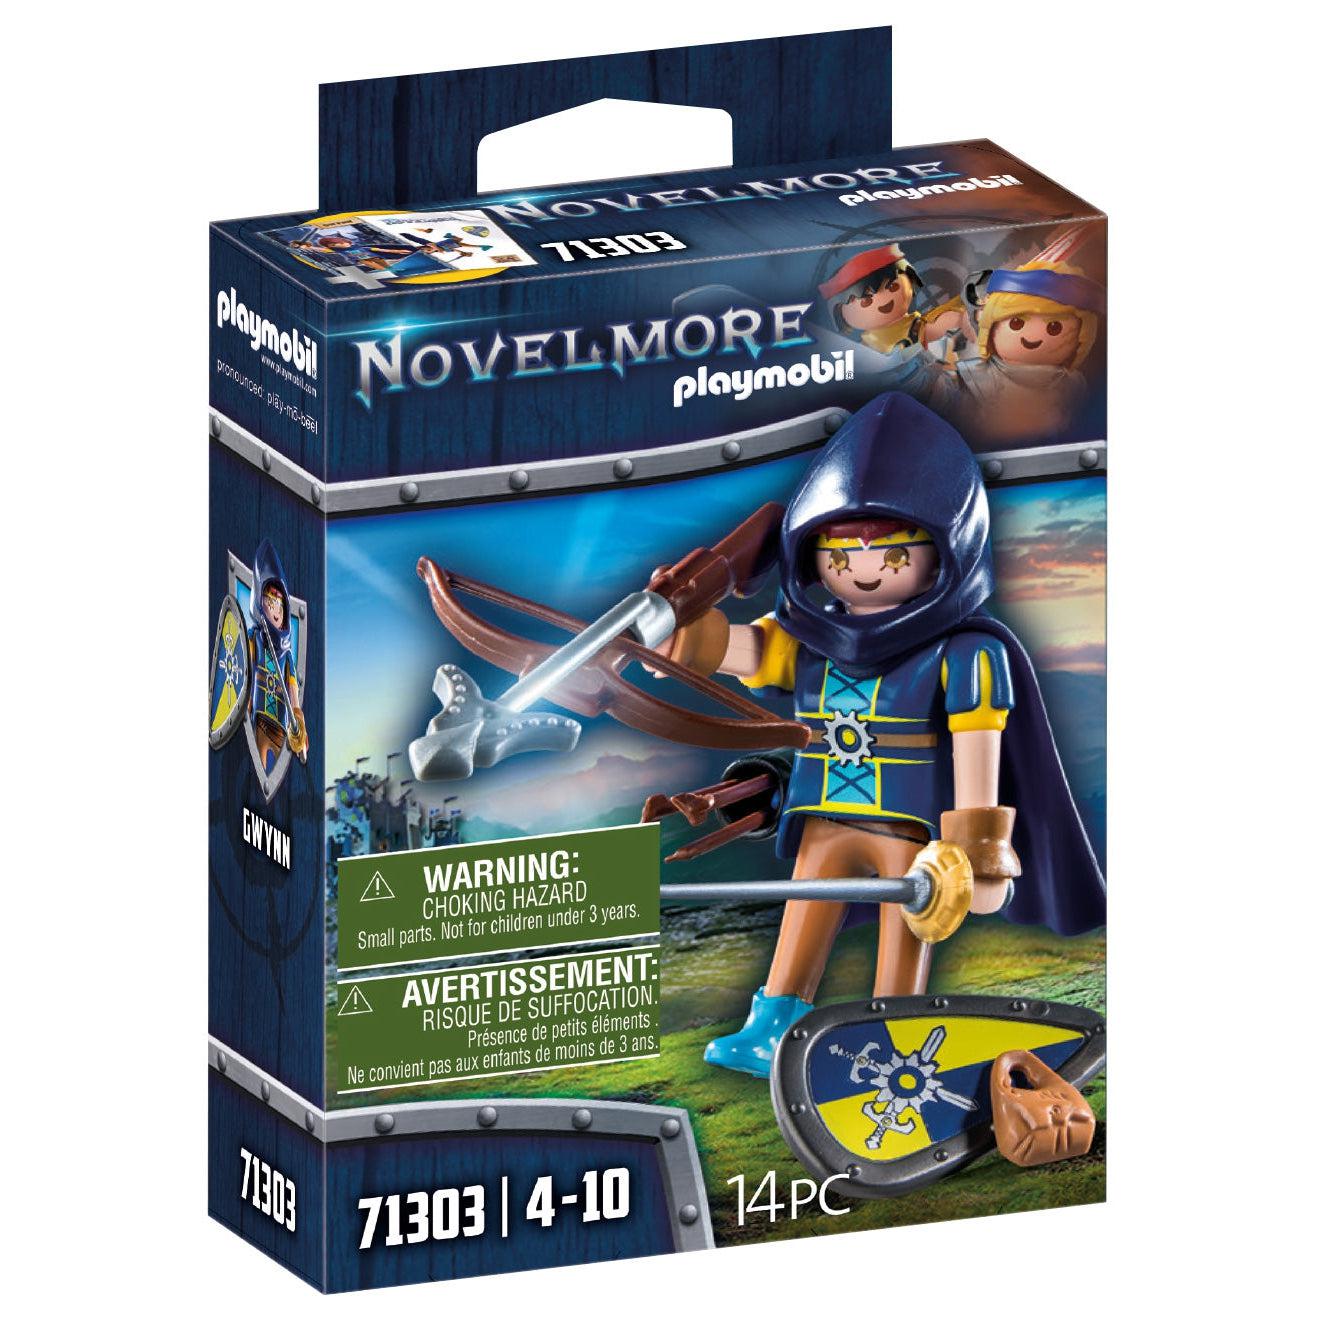 Playmobil-Novelmore - Gwynn with Combat Equipment-71303-Legacy Toys